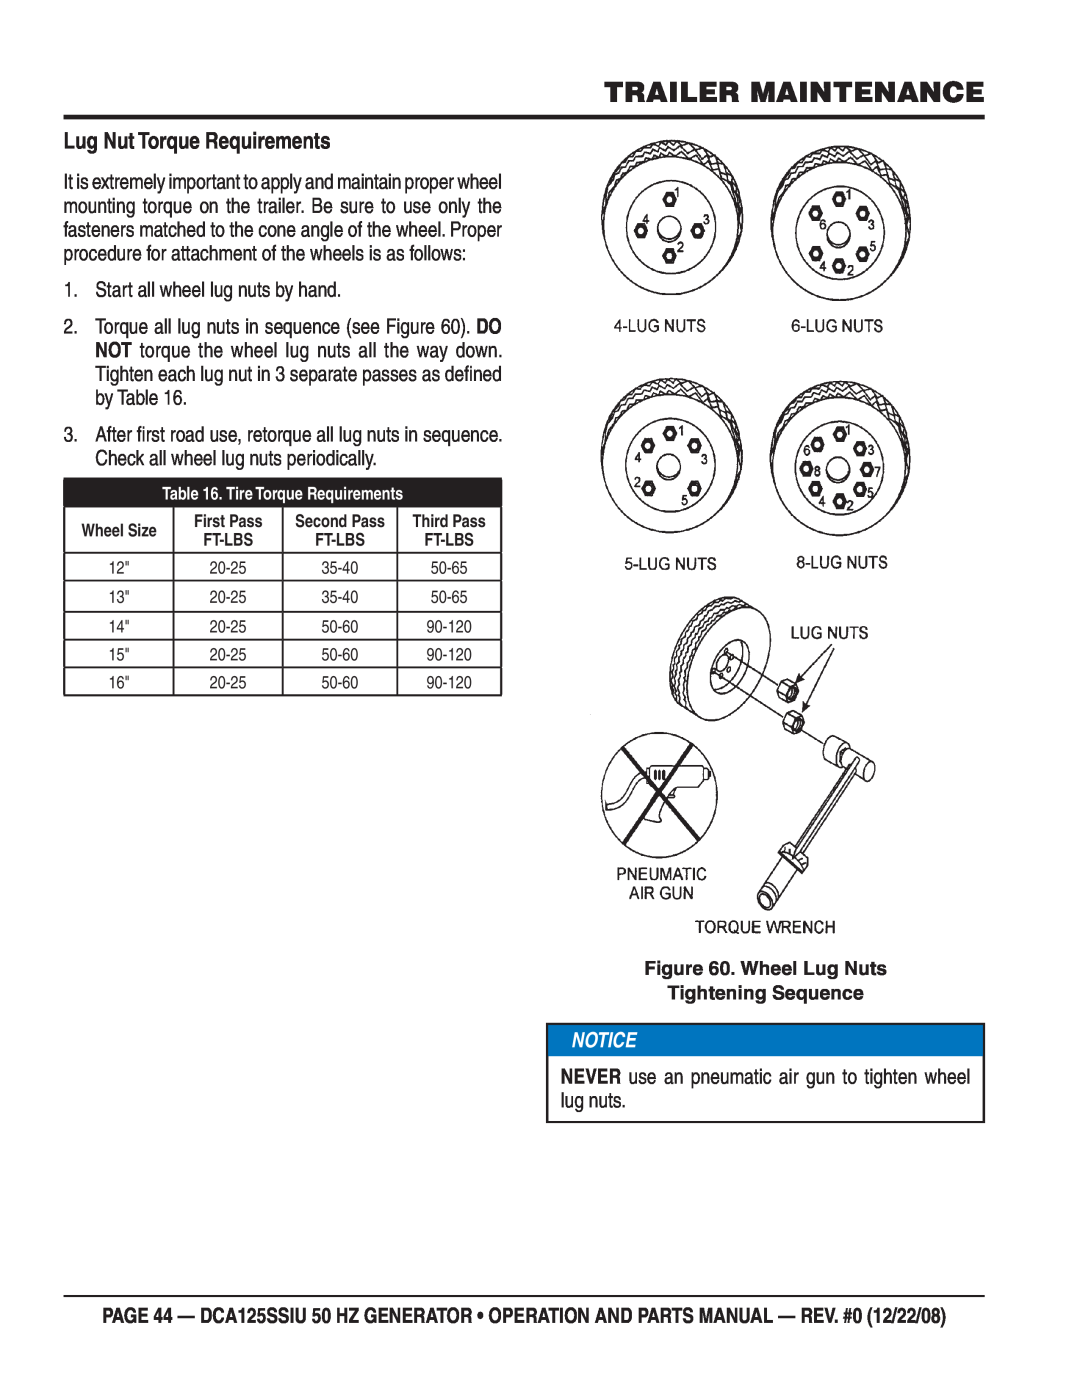 Multiquip DCA125SSIU manual Lug Nut Torque Requirements, Trailer Maintenance, Notice 